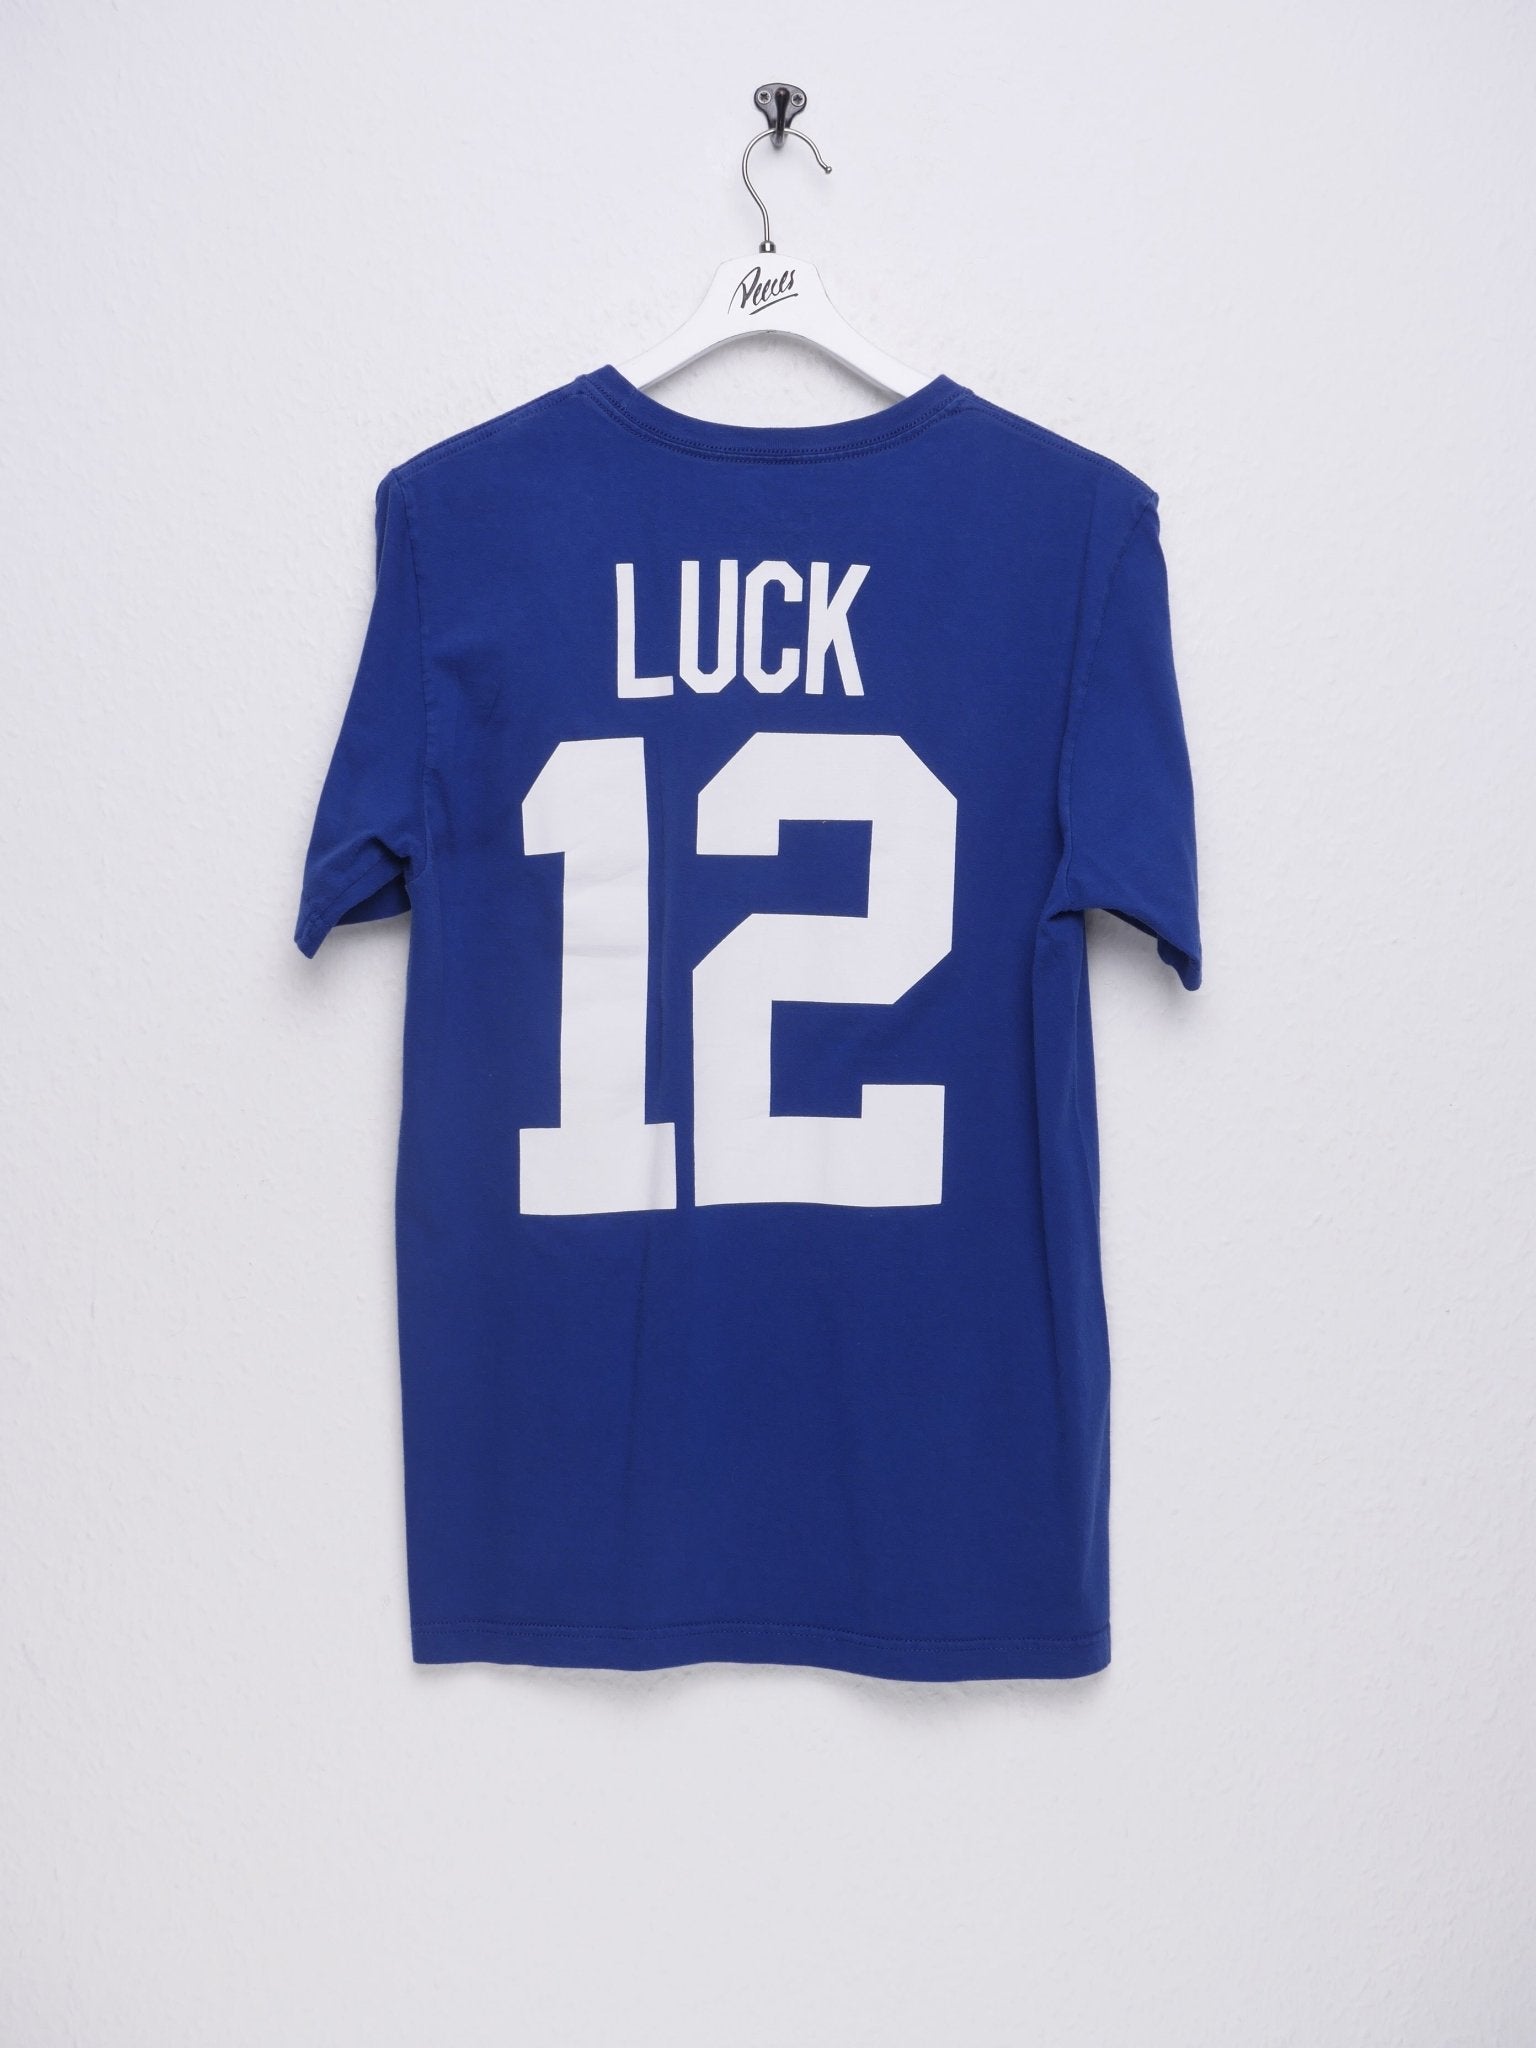 Nike Luck printed Swoosh blue Shirt - Peeces